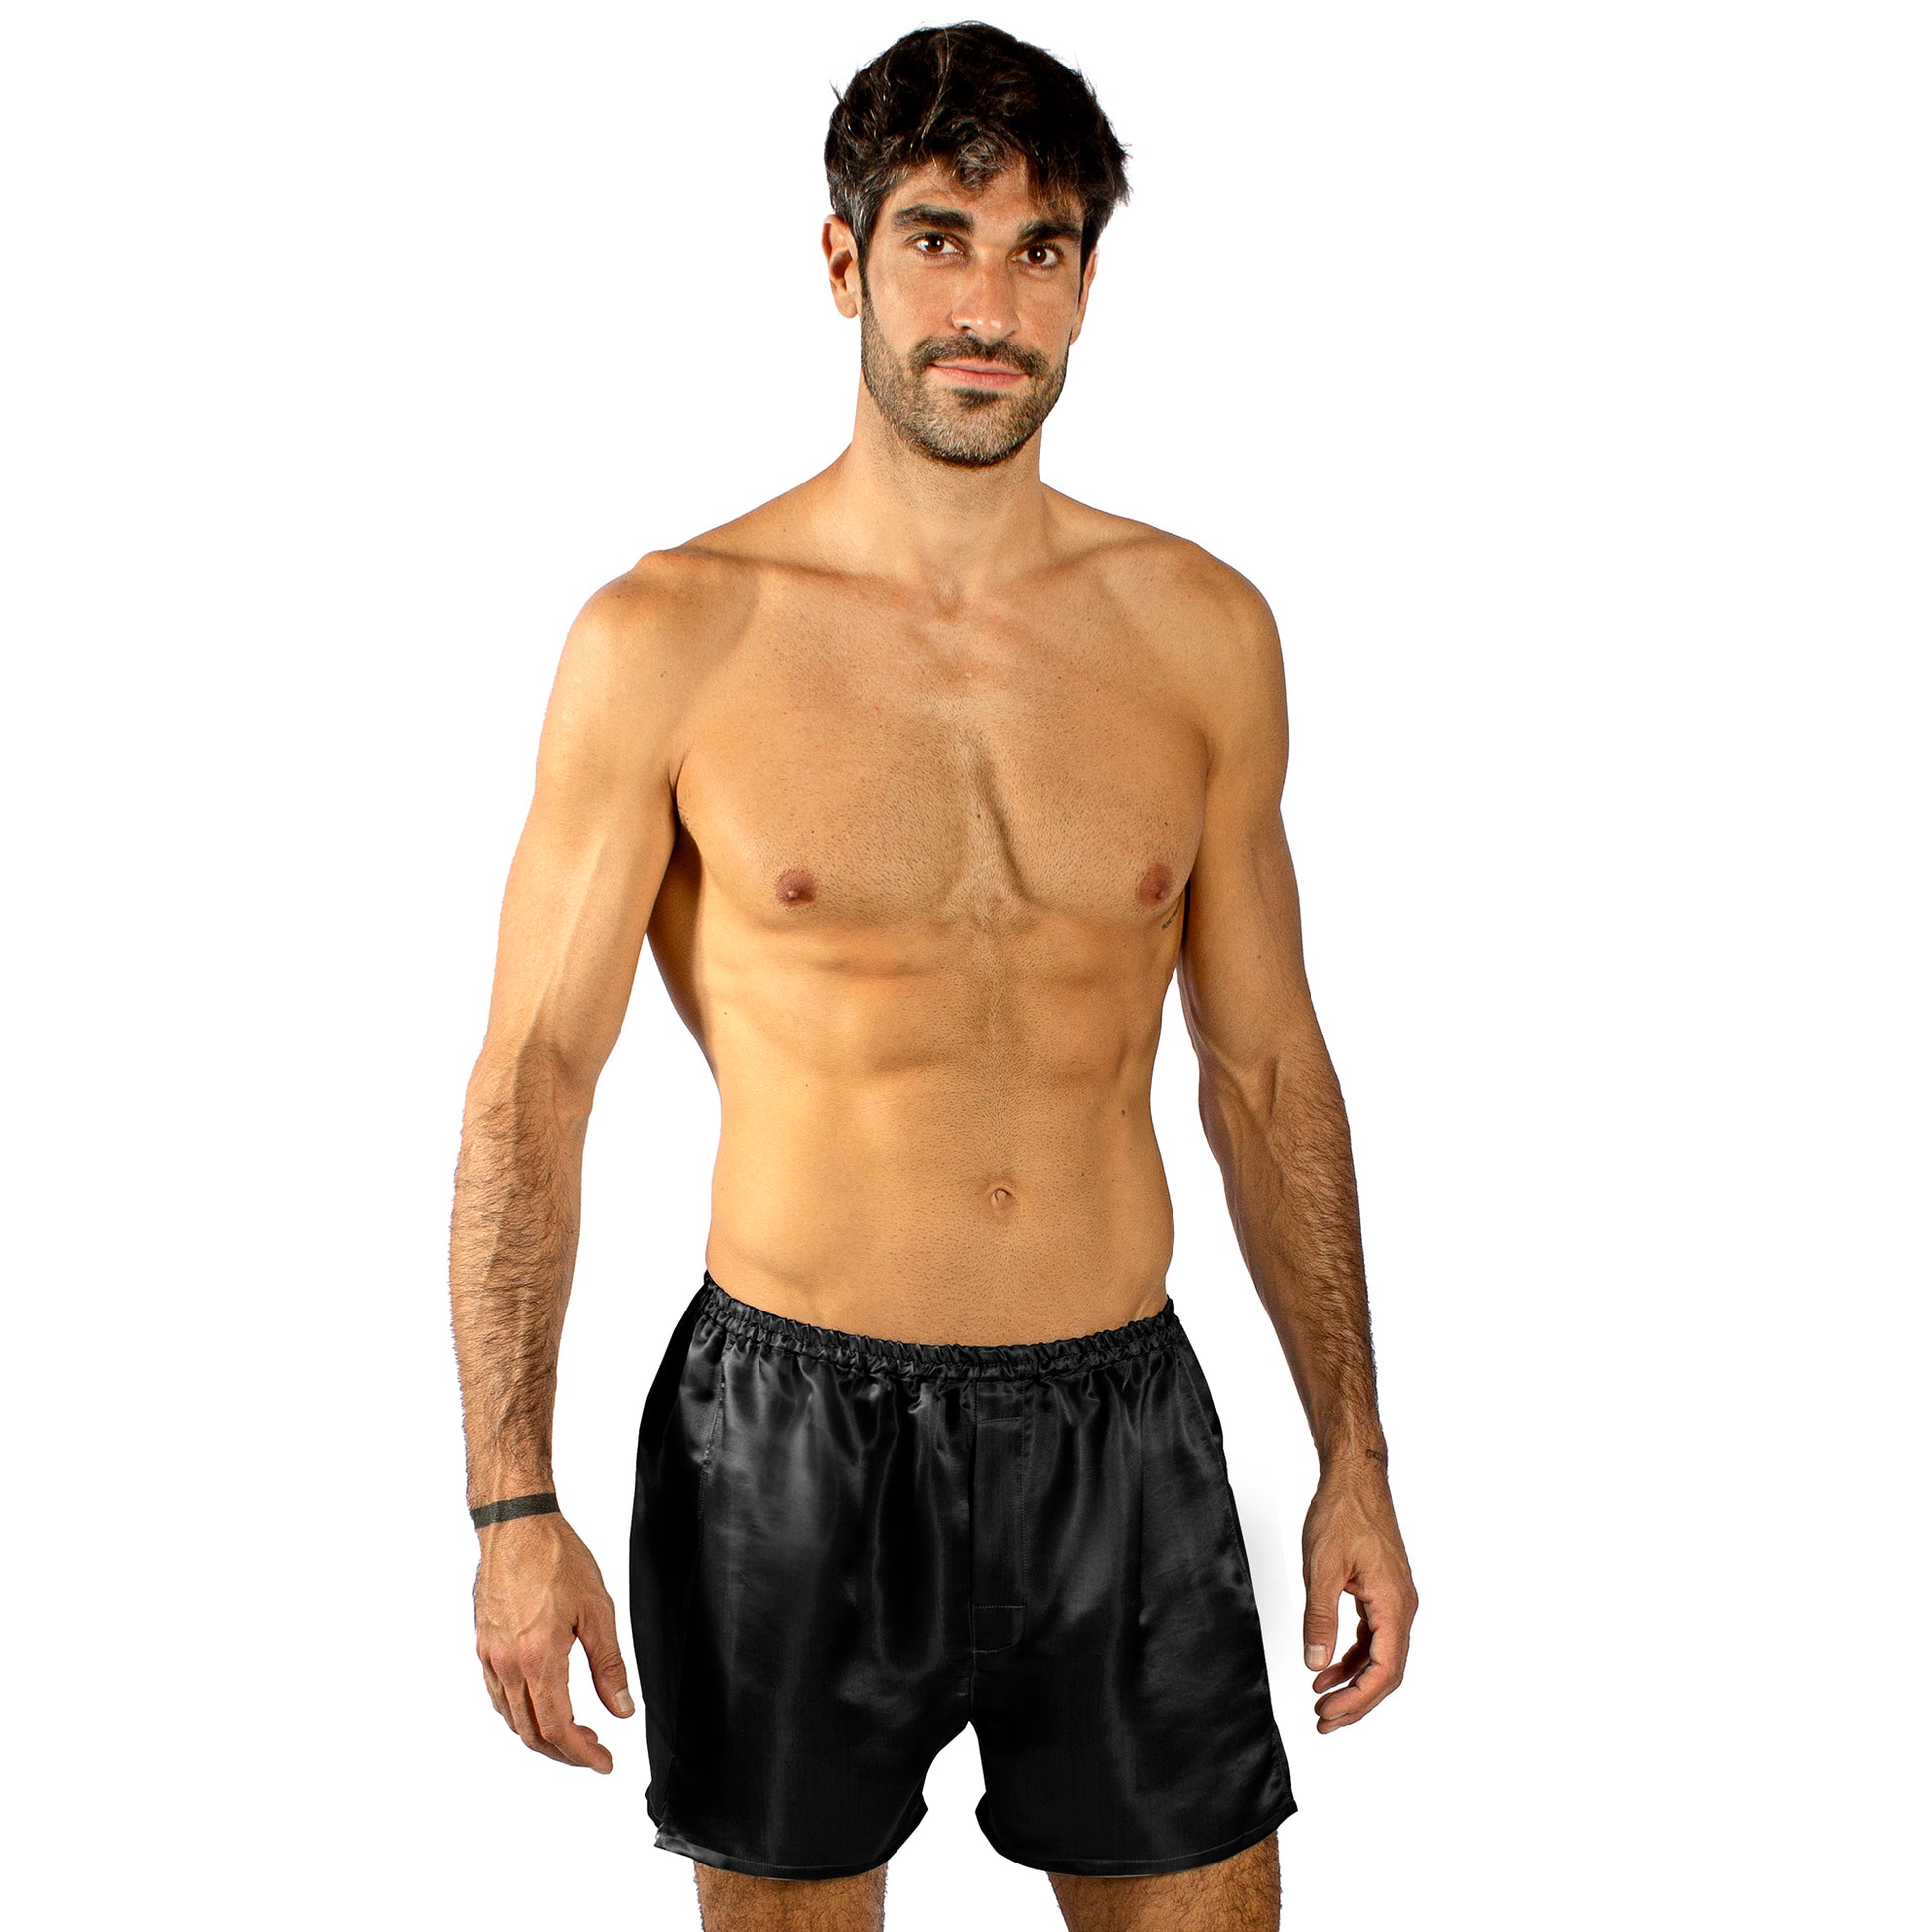 Men's Silk Sleepwear Boxer Shorts - Black - The Silk Lady